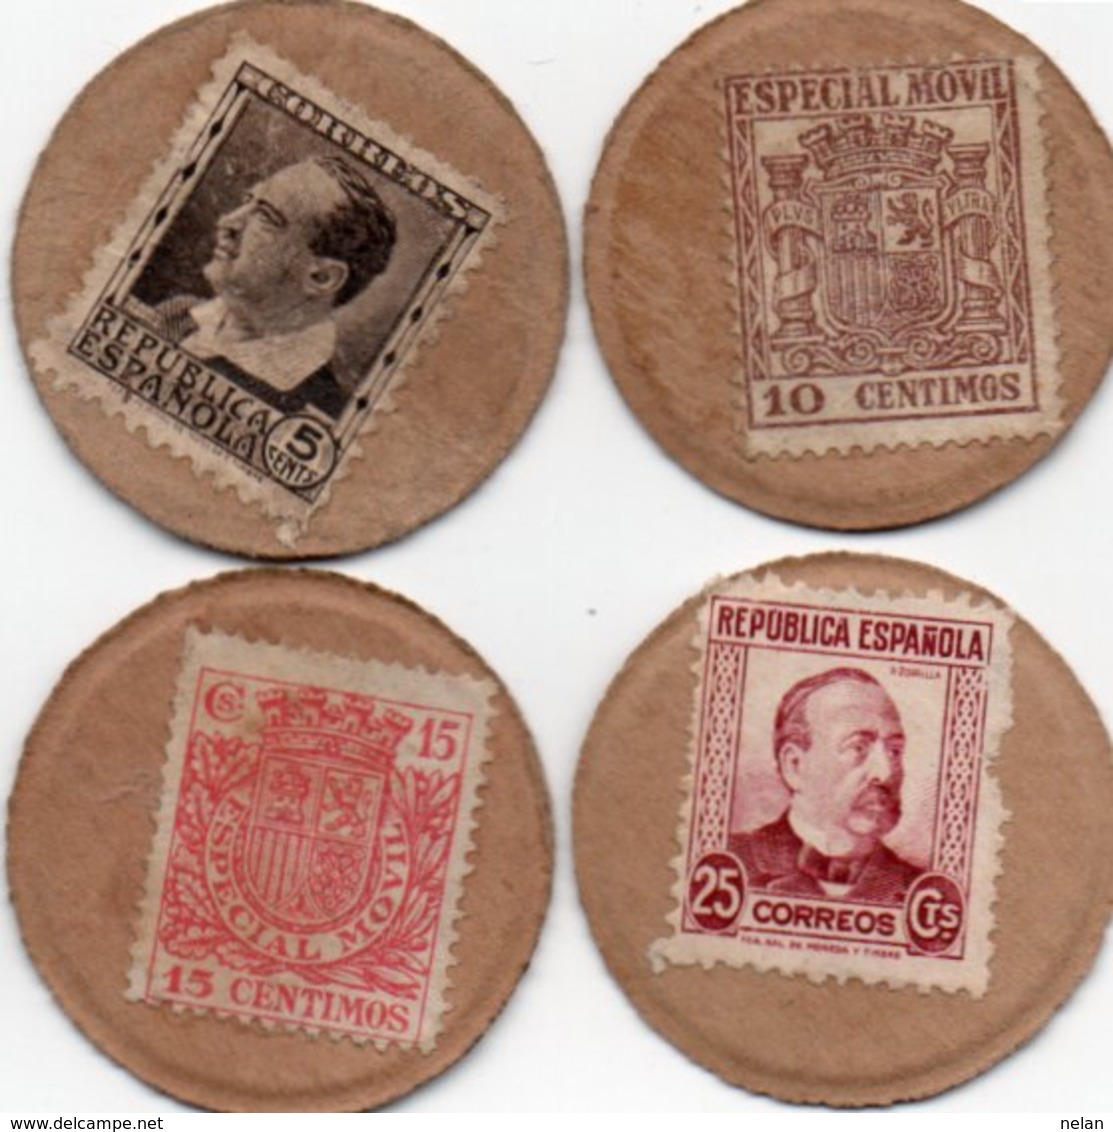 SPAGNA 5,10,15,25 CENTIMOS 1938 P-96 F,I,P,R (PERFETTE CONDIZIONI)Spagna, Fábrica Nacional De Moneda Y Timbre - FNMT - Colecciones